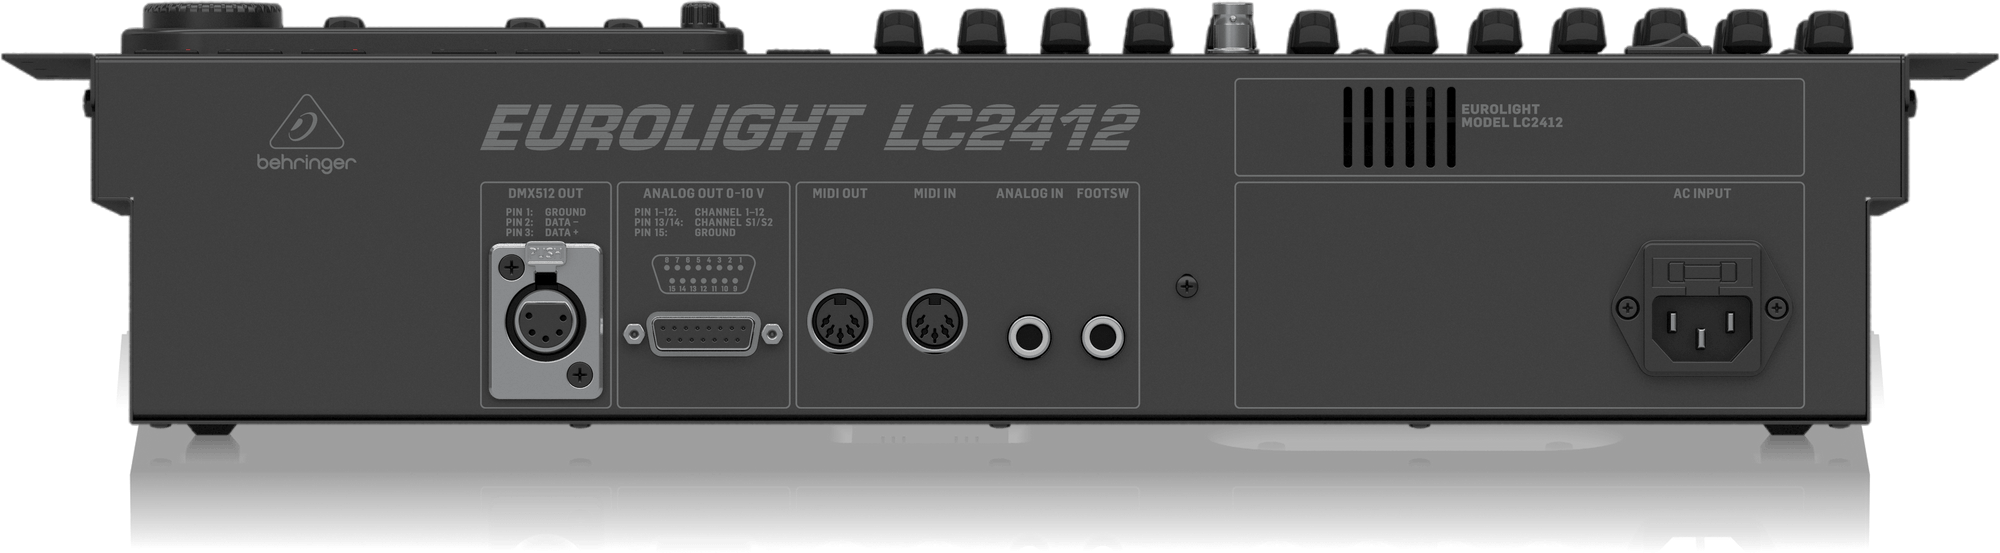 Behringer EUROLIGHT LC2412 V2 Professional 24-Channel DMX Lighting Console